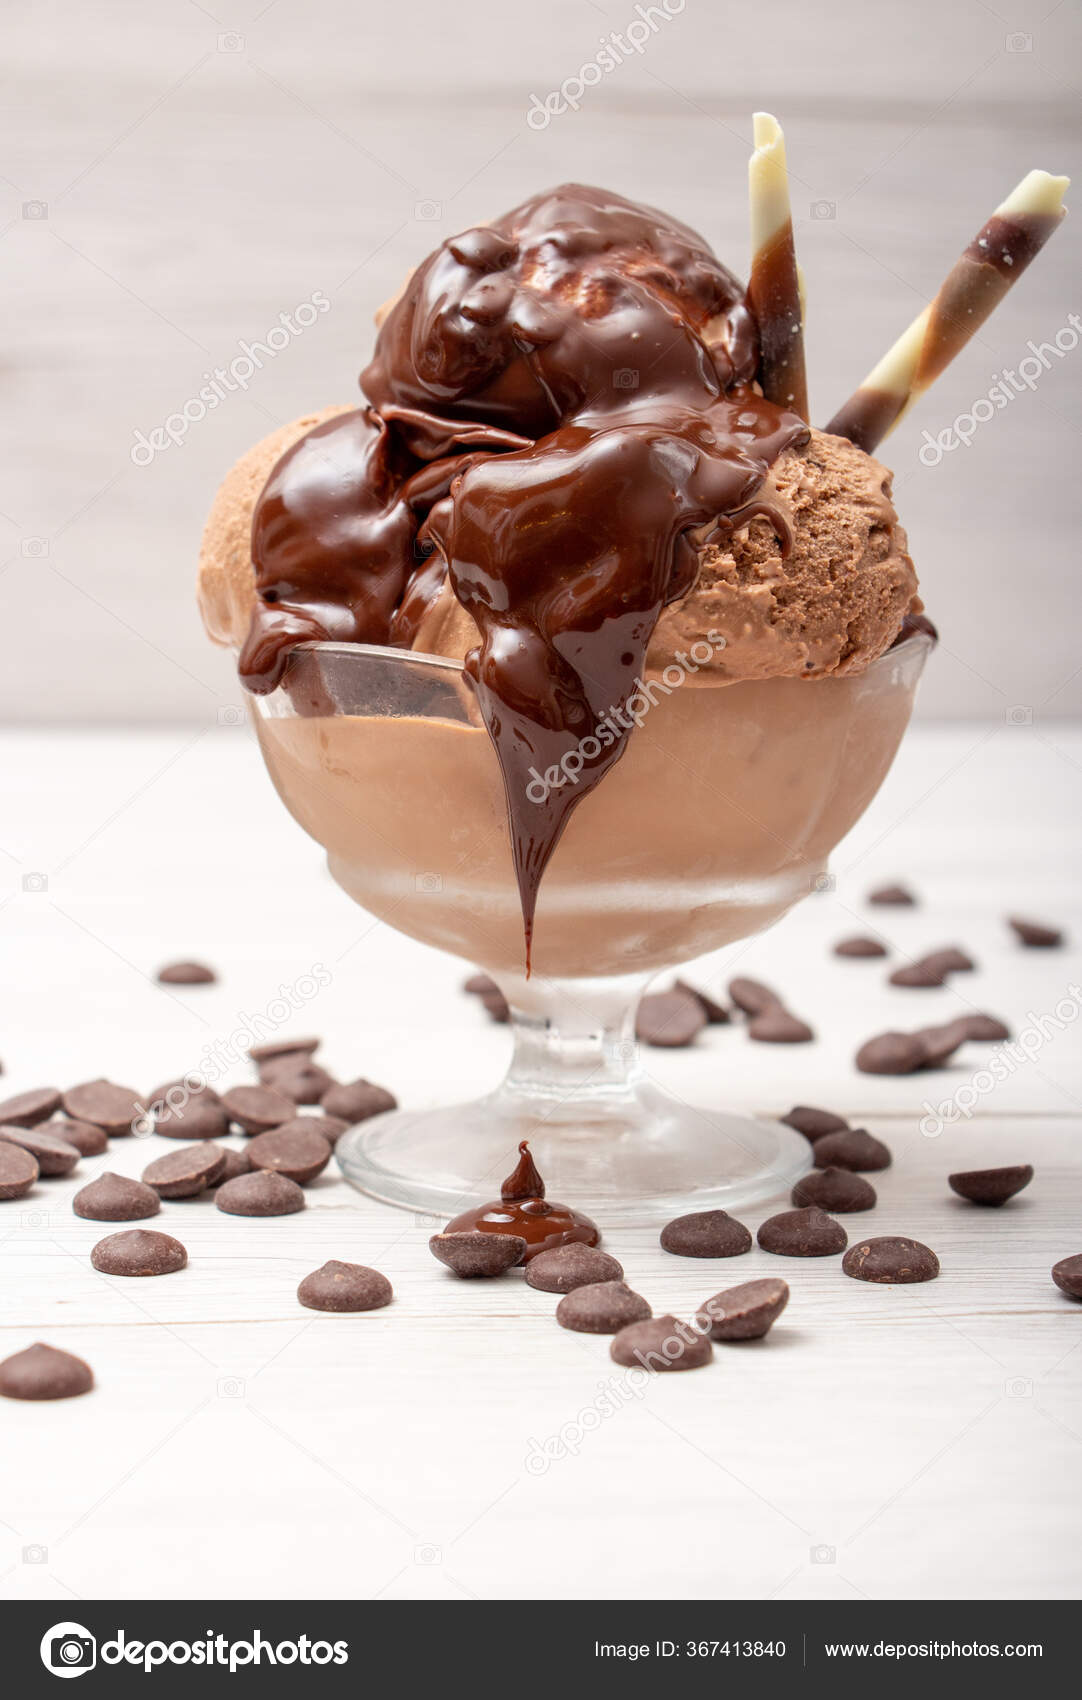 https://st3.depositphotos.com/26735172/36741/i/1600/depositphotos_367413840-stock-photo-chocolate-ice-cream-ball-glass.jpg